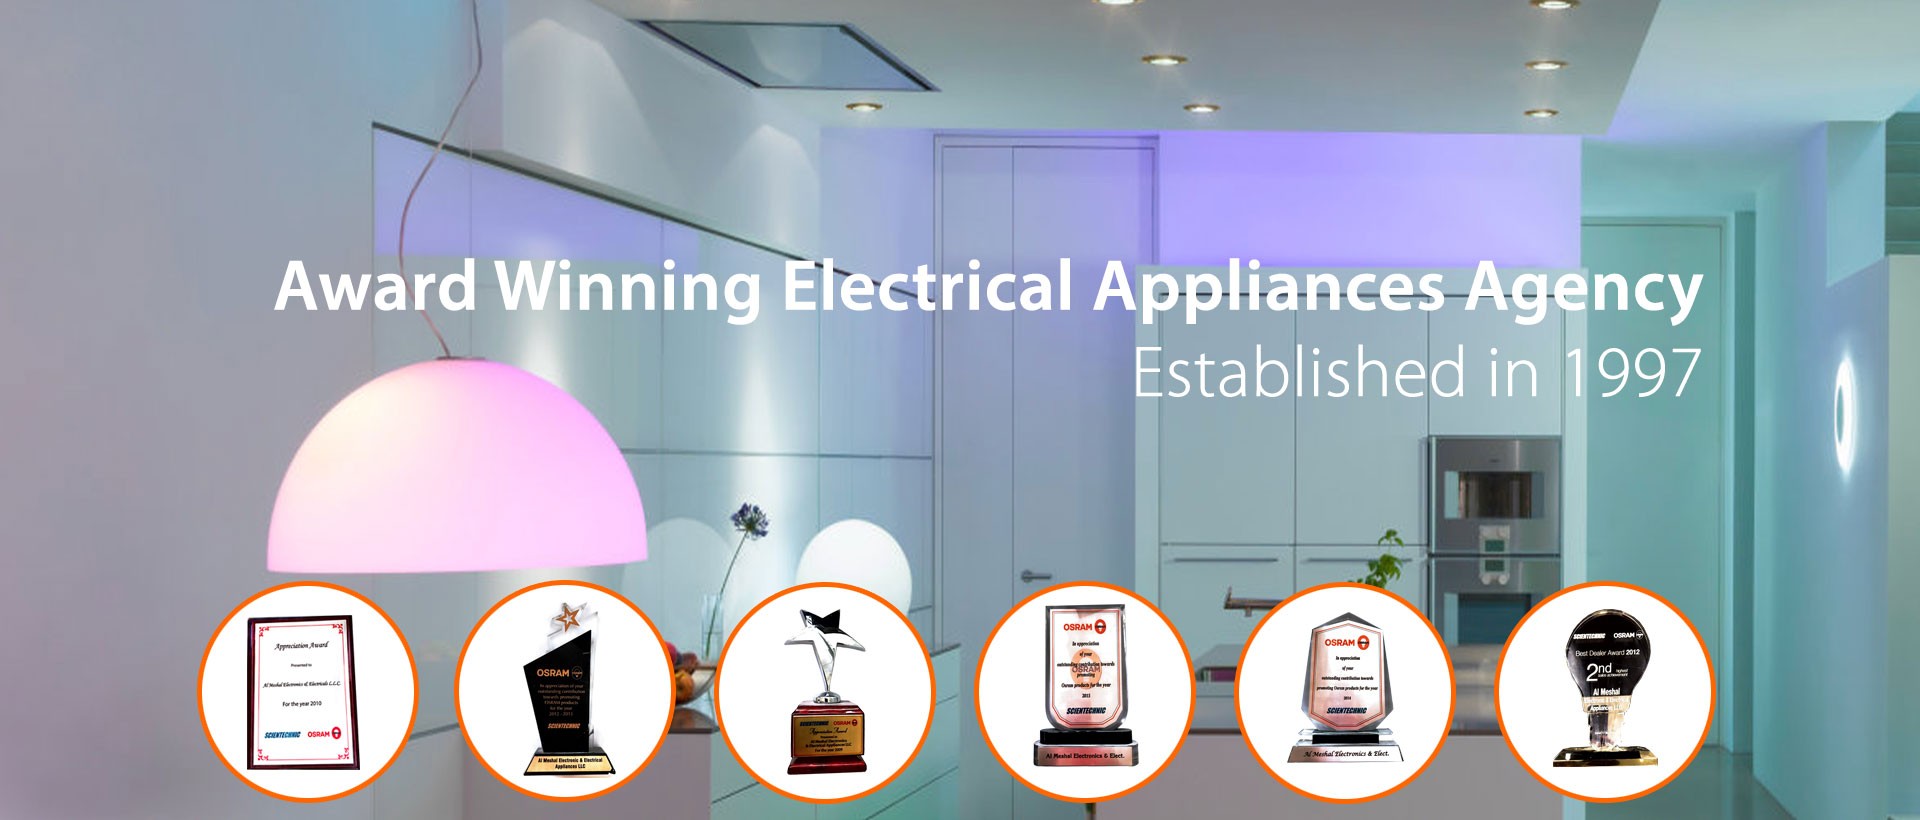 Award Wining Electrical Appliances